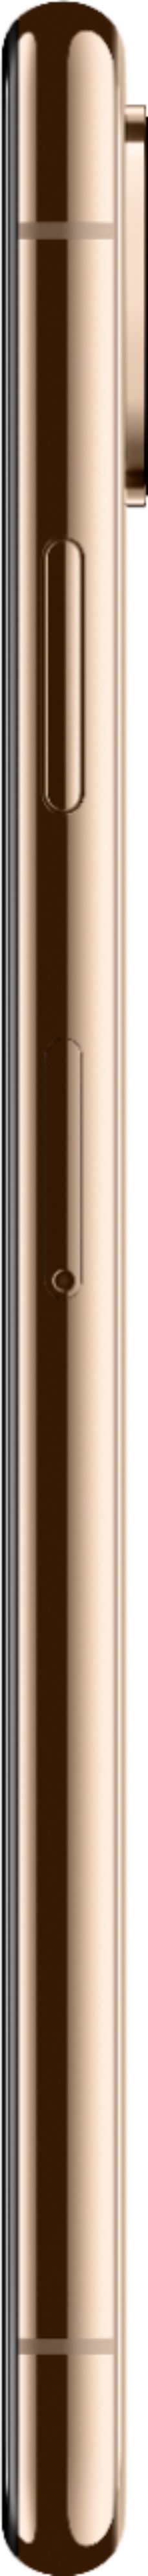 Best Buy: Apple iPhone XS Max 512GB Gold (AT&T) MT5J2LL/A